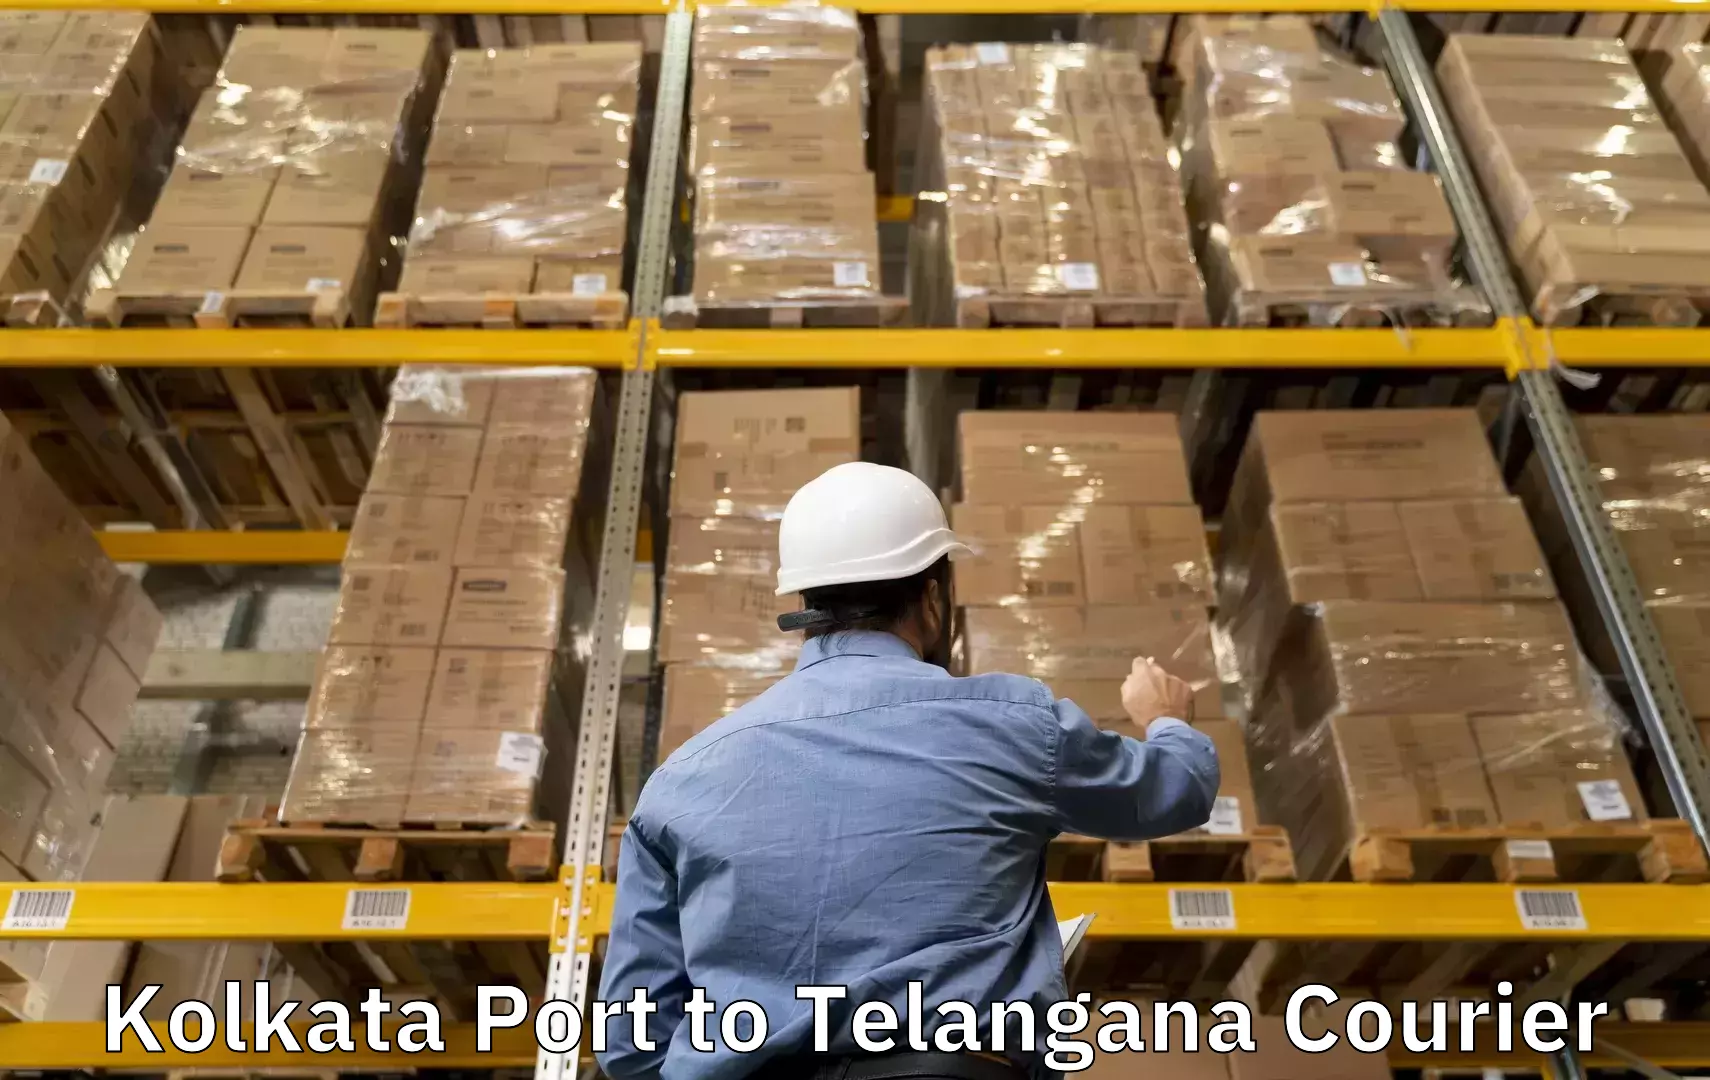 Luggage shipment tracking Kolkata Port to Sathupally